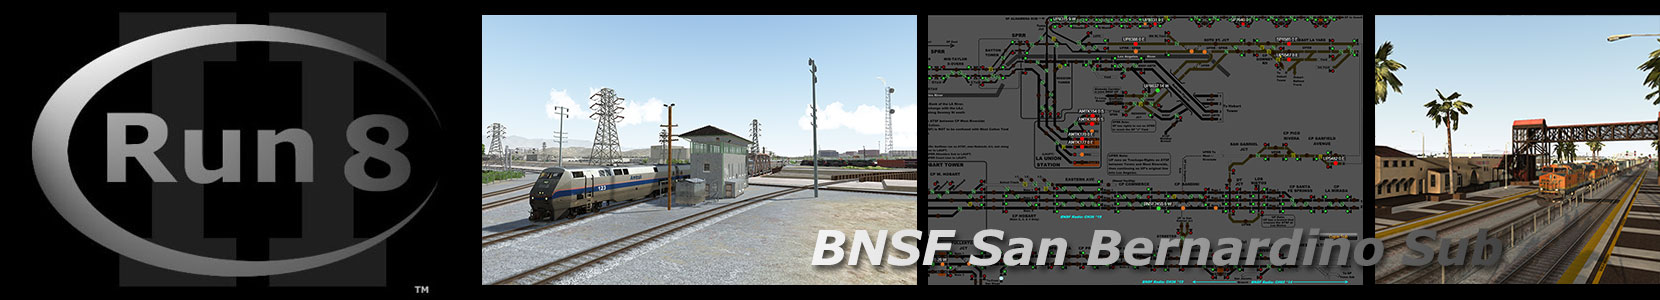 Run8 Train Simulator BNSF San Bernardino Sub